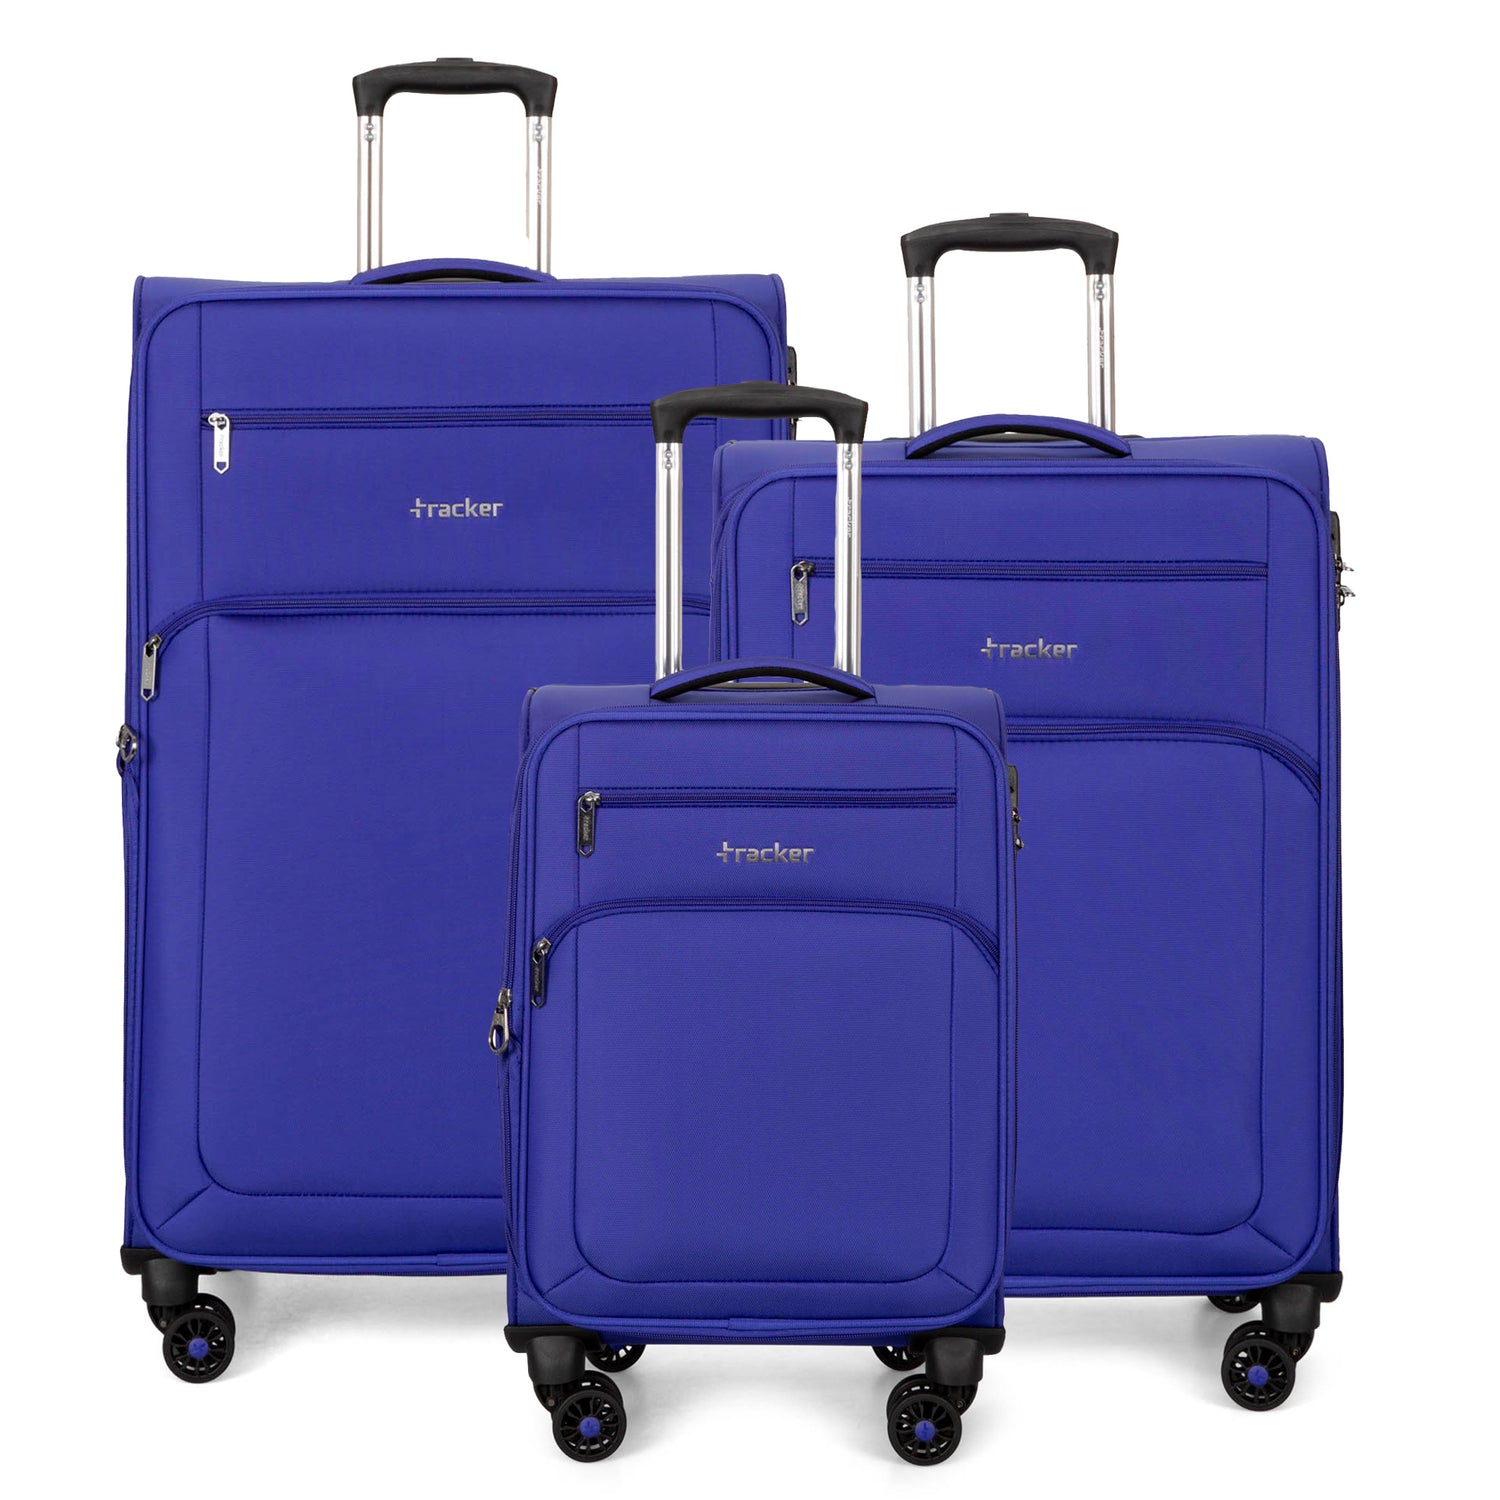 Verona Softside 3-Piece Luggage Set